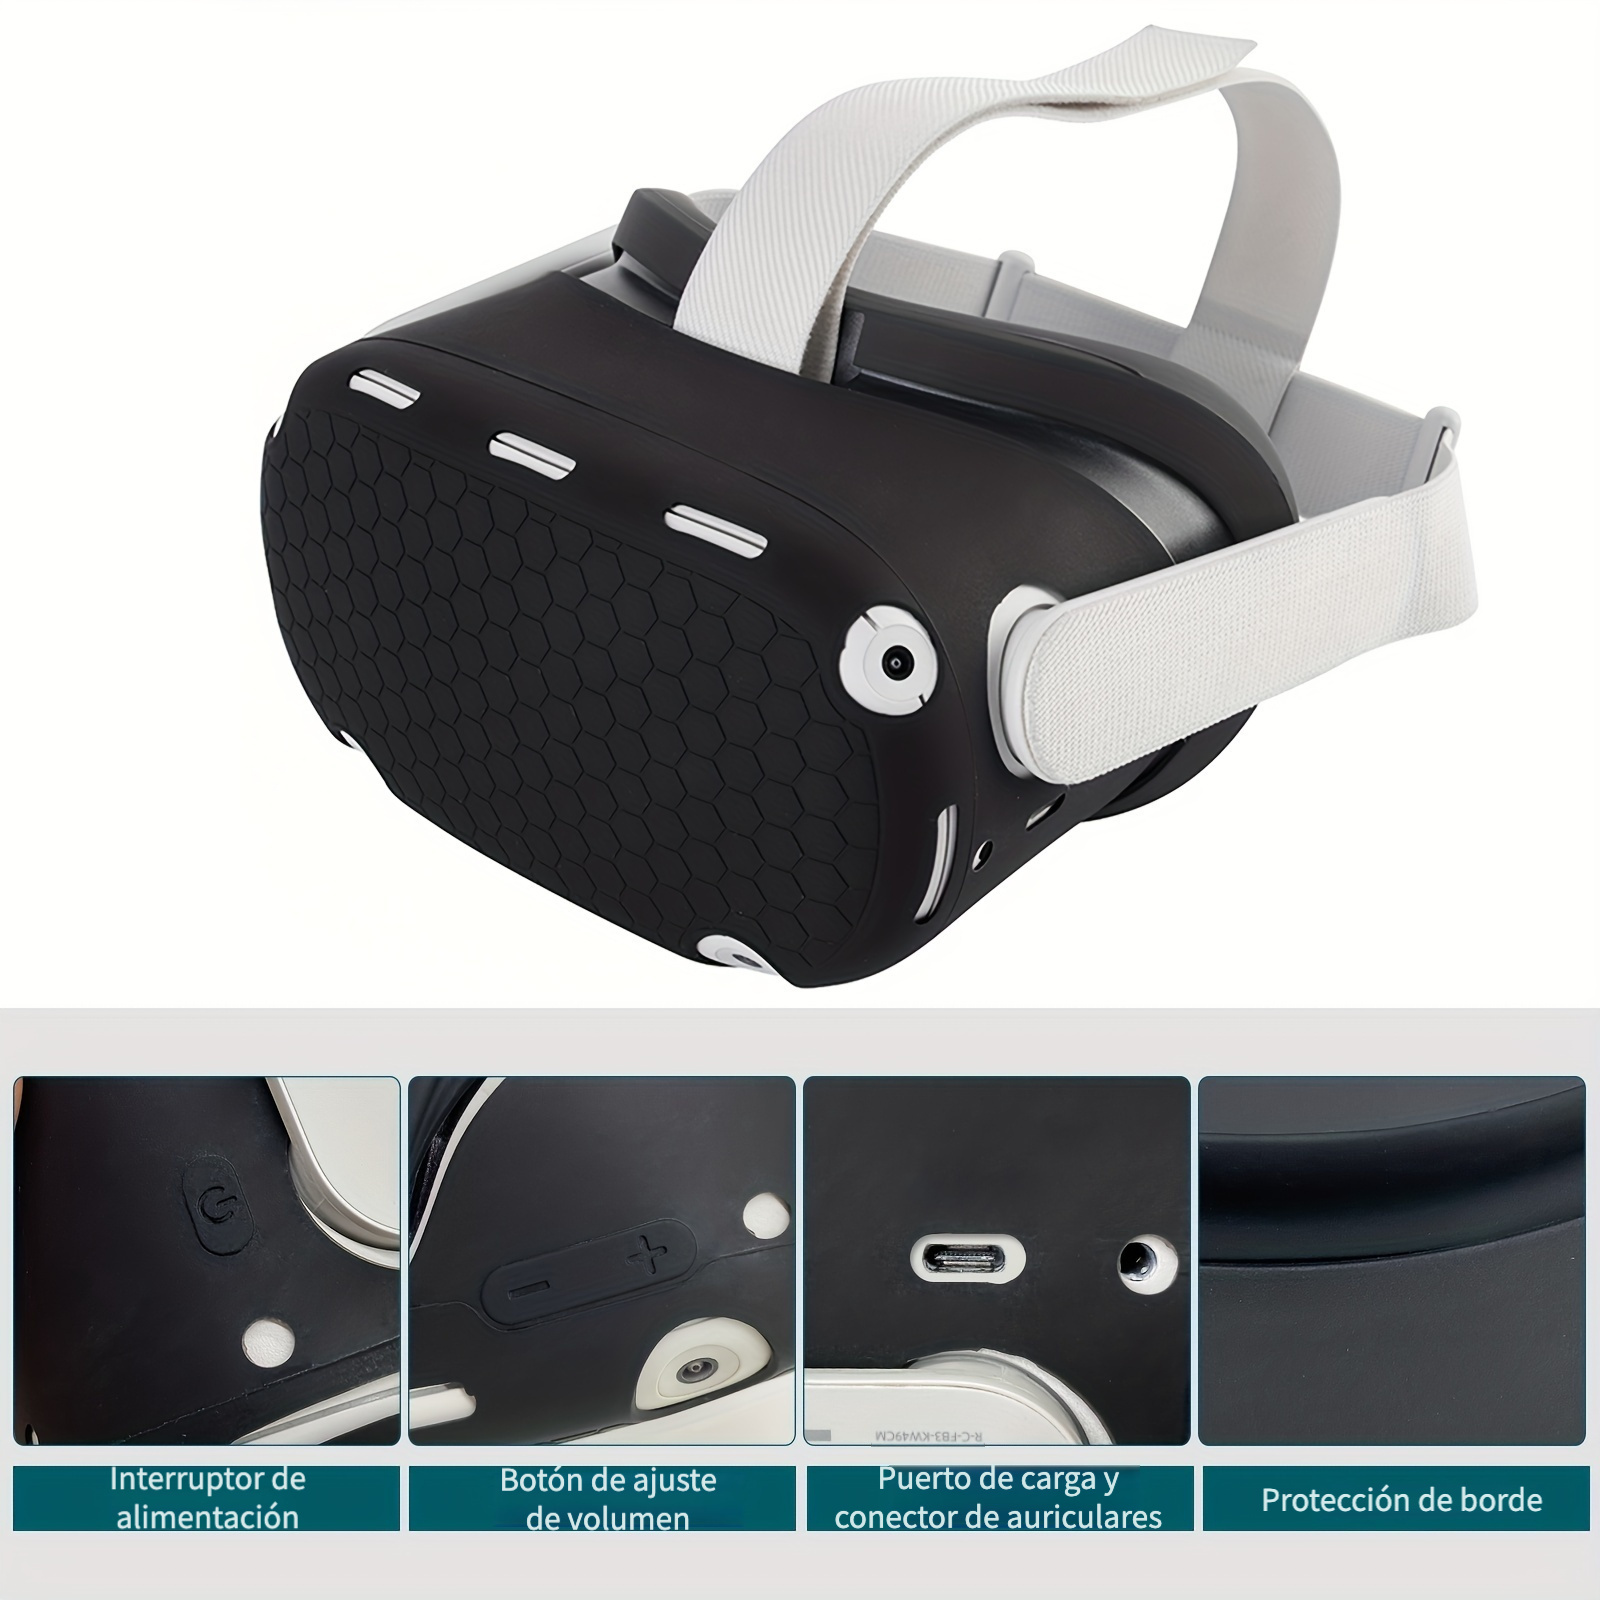 Auriculares de silicona VR Shells Protector funda protectora para